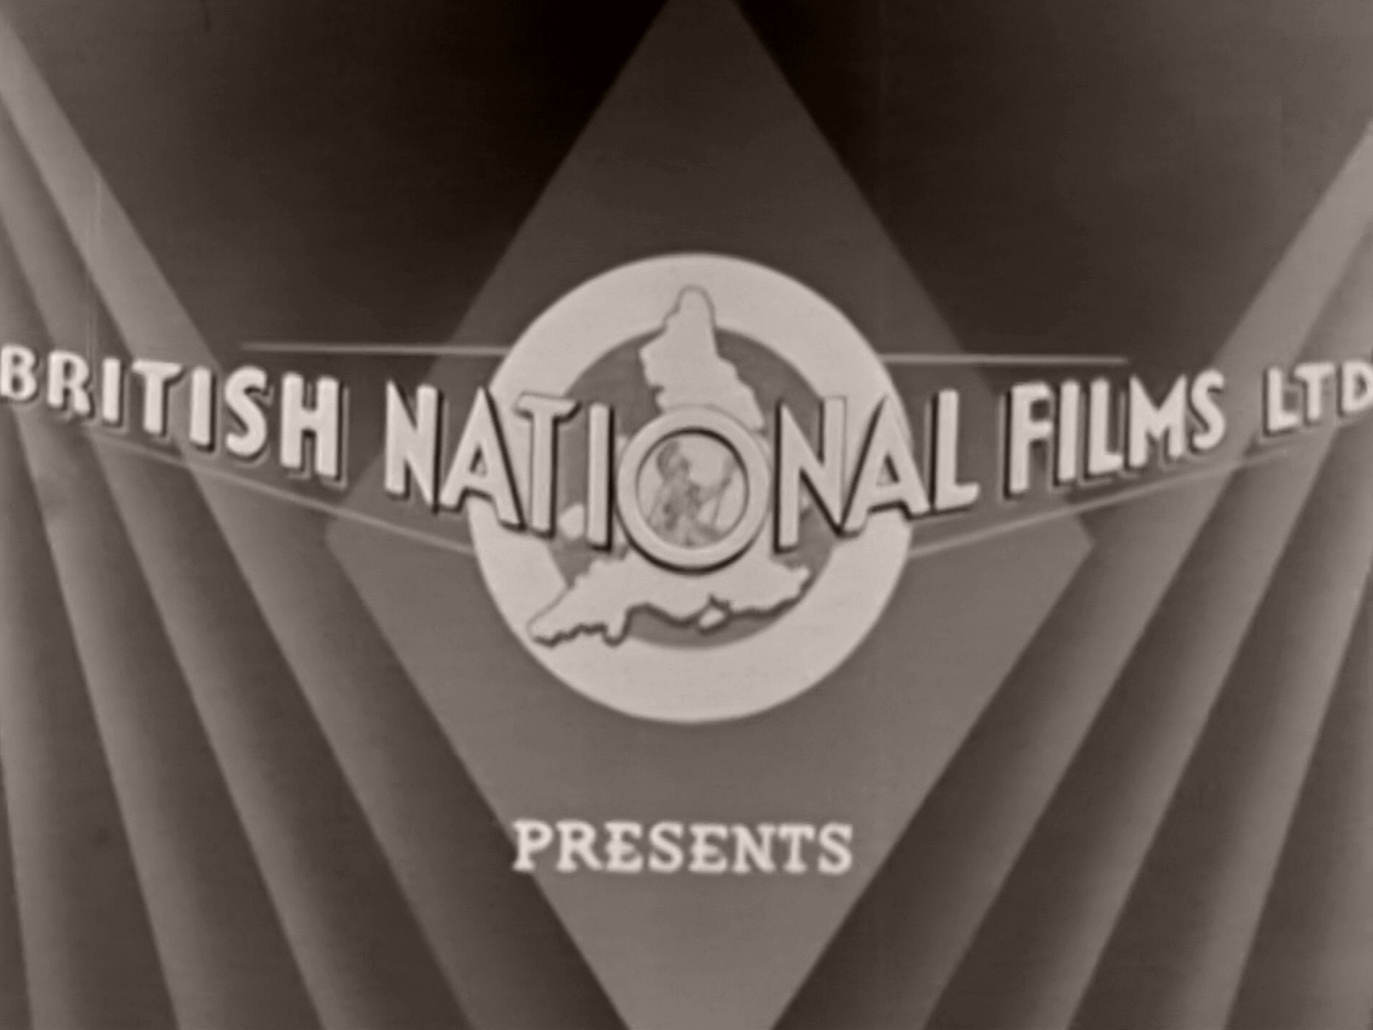 Main title from Sabotage at Sea (1942) (1). British National Films Ltd presents